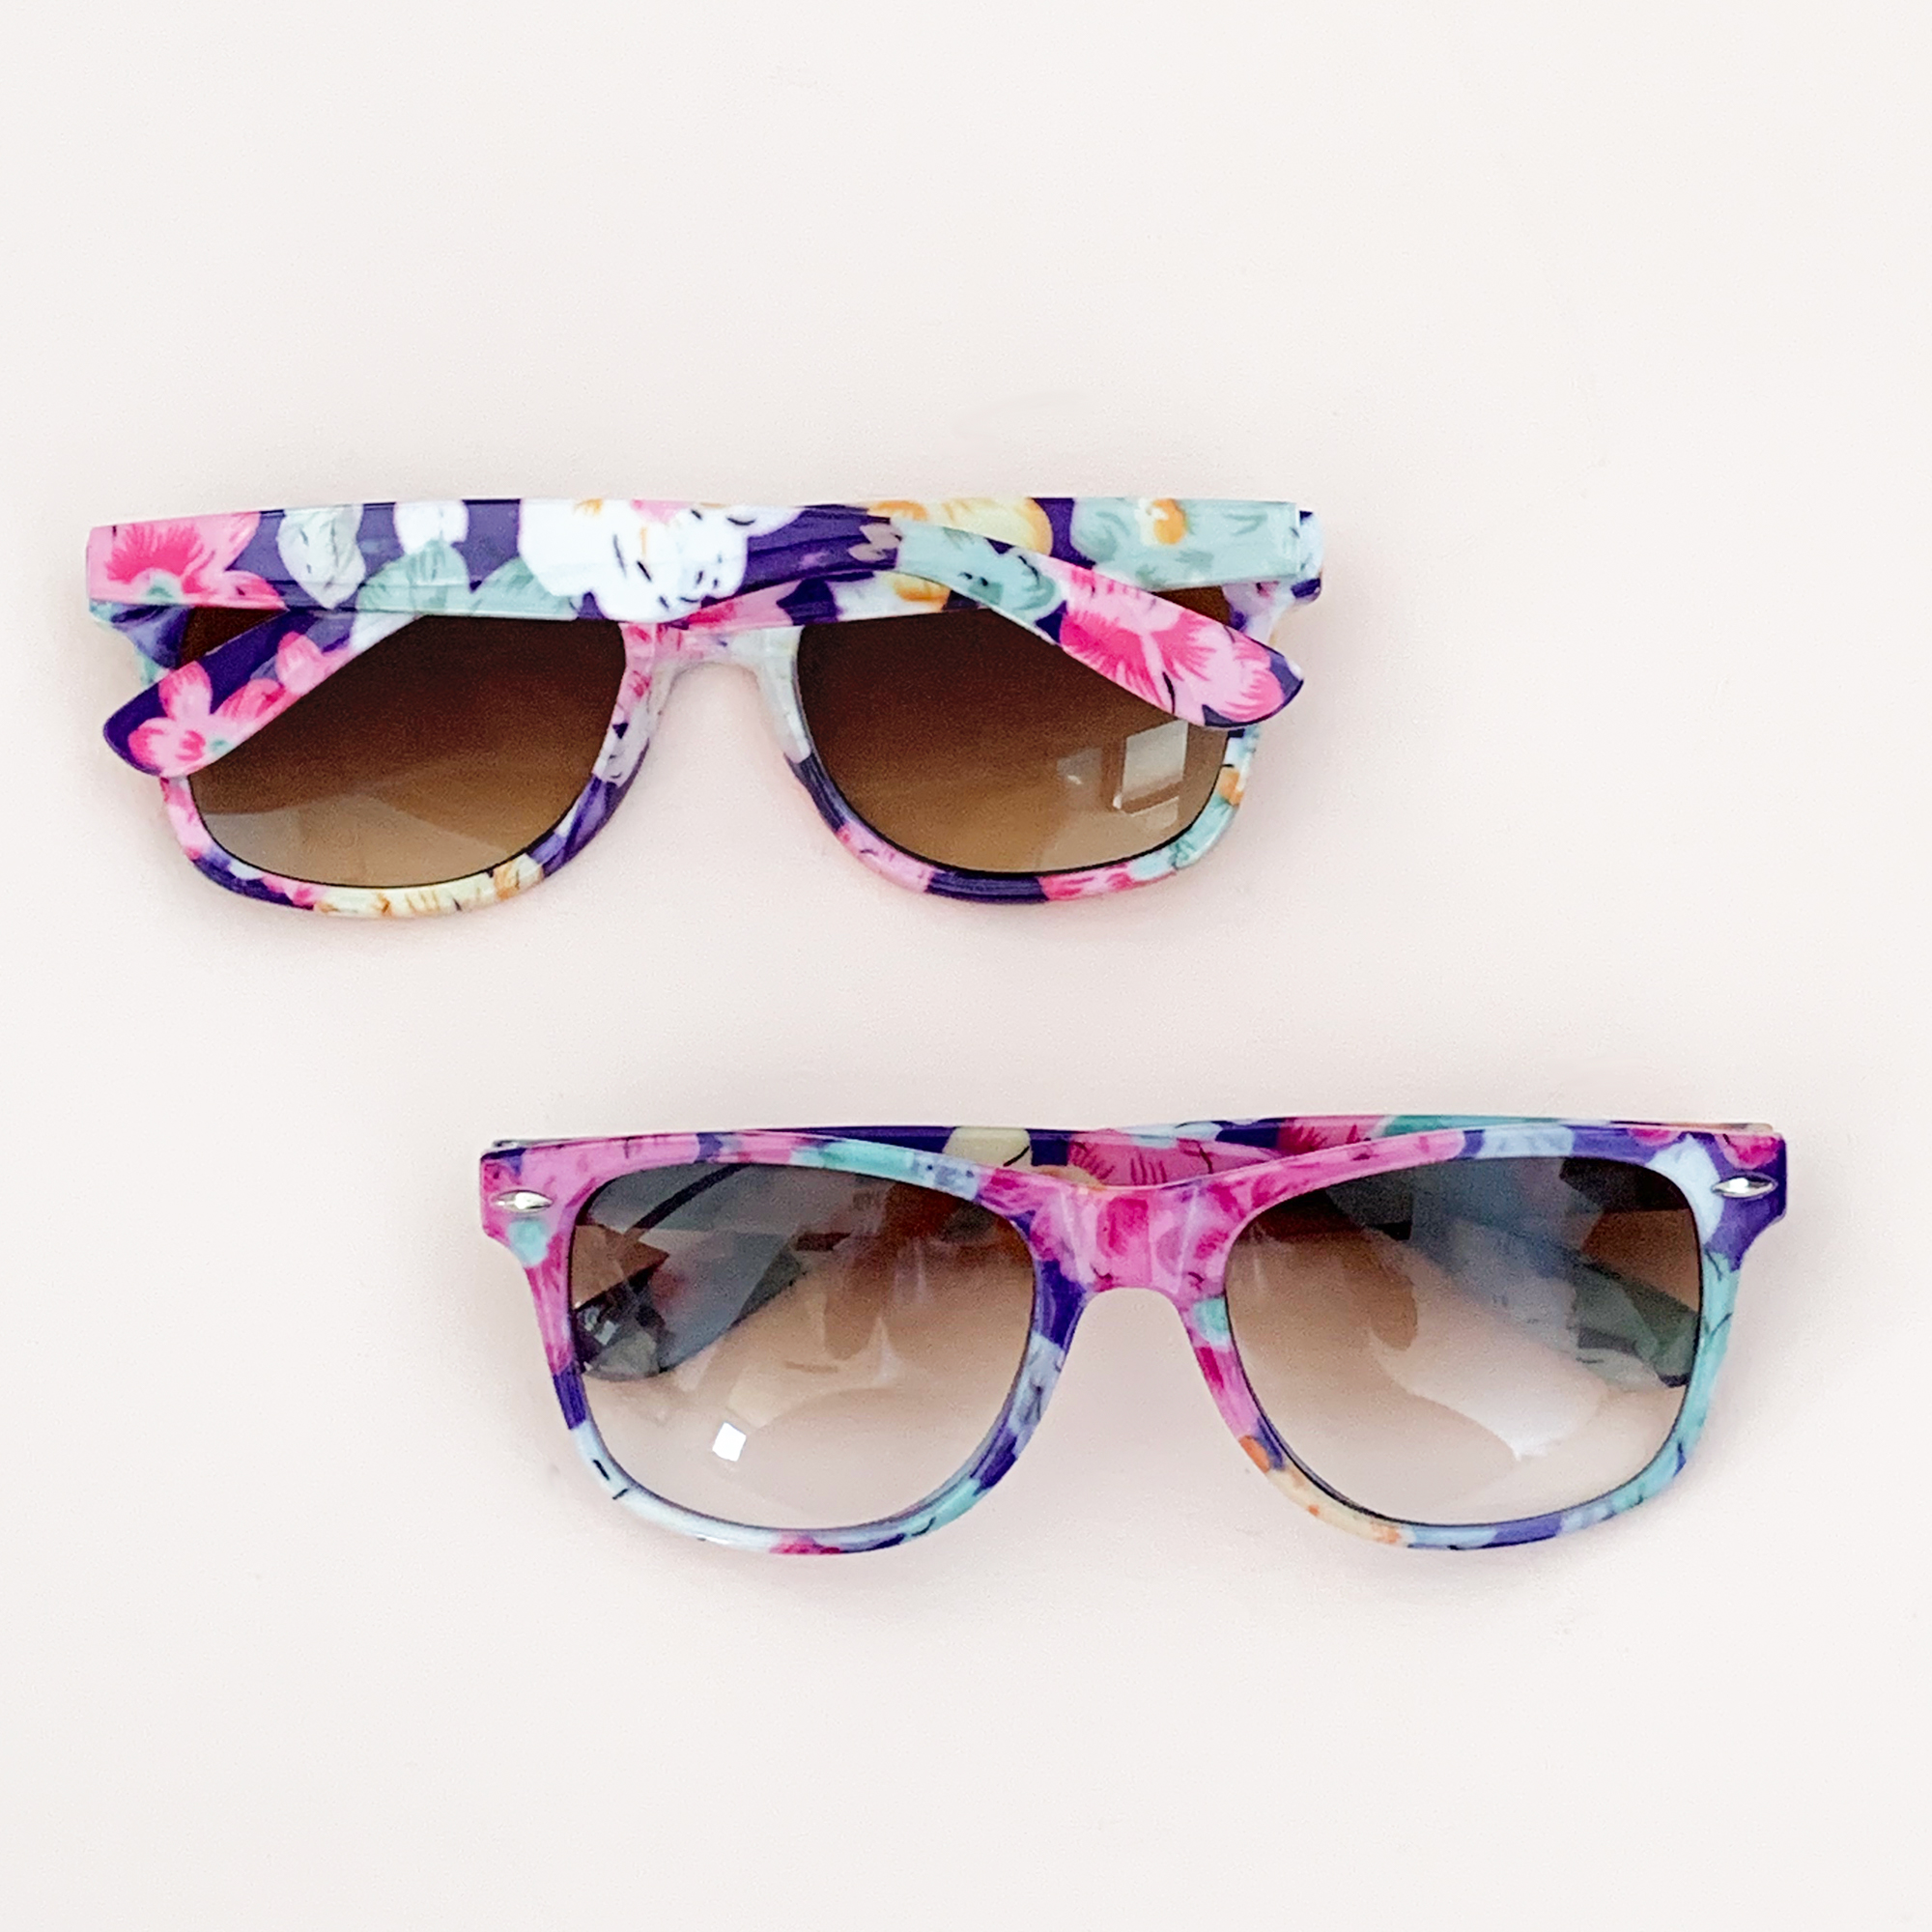 DIY Alexander Wang Zipper Sunglasses Featured in Free Magazine - Chic  Creative Life